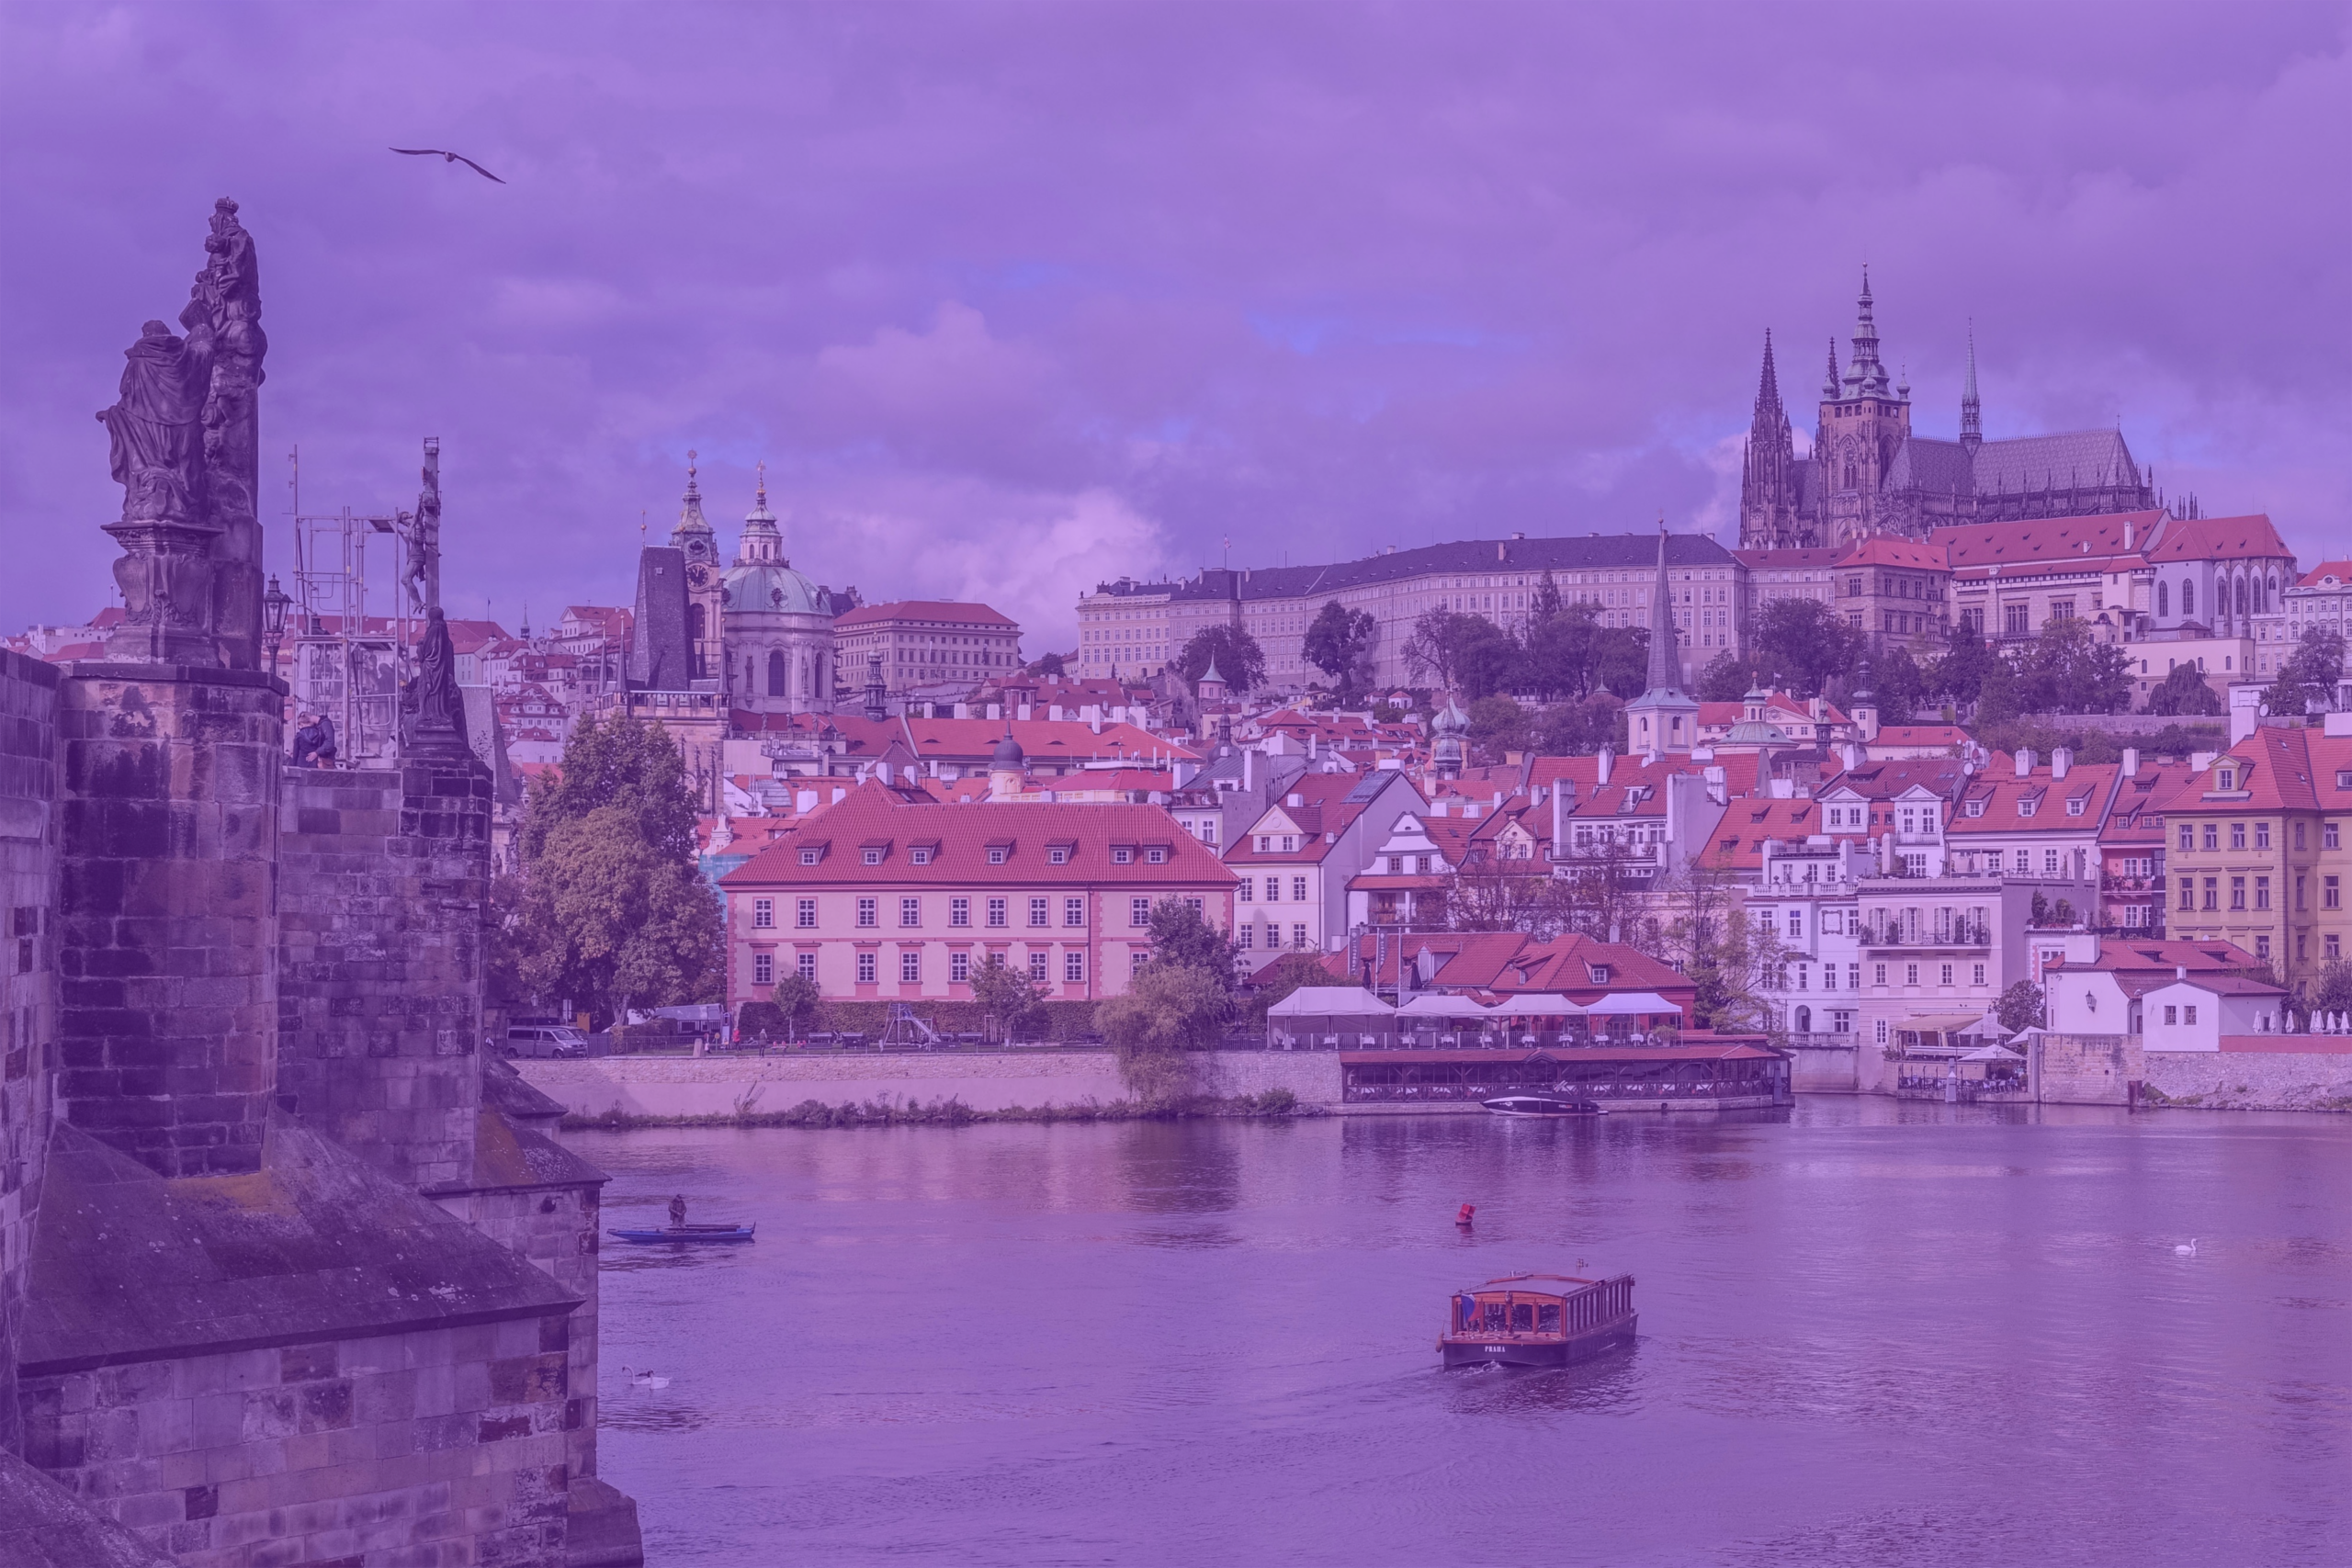 Seán Hanley and Milada Anna Vachudova – Understanding the illiberal turn: democratic backsliding in the Czech Republic